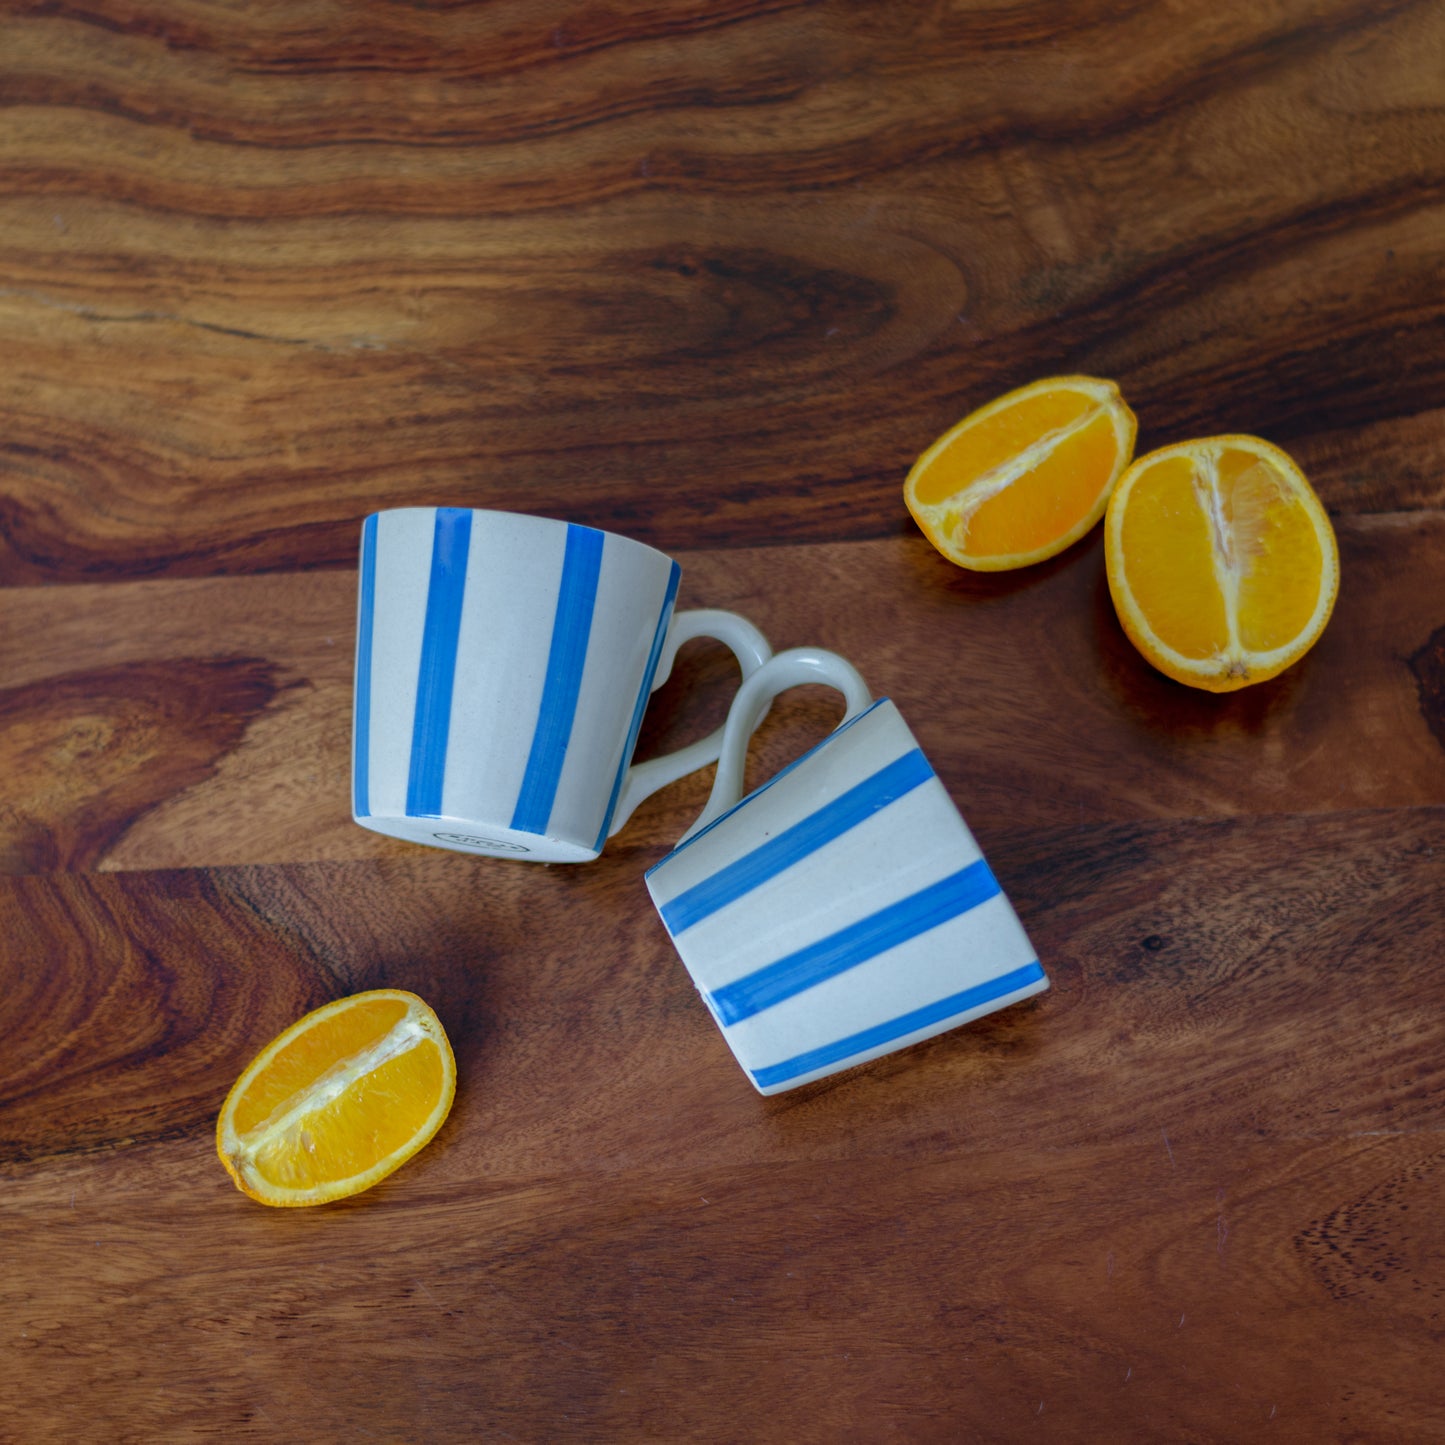 Stripe Mugs Blue - Set of 2